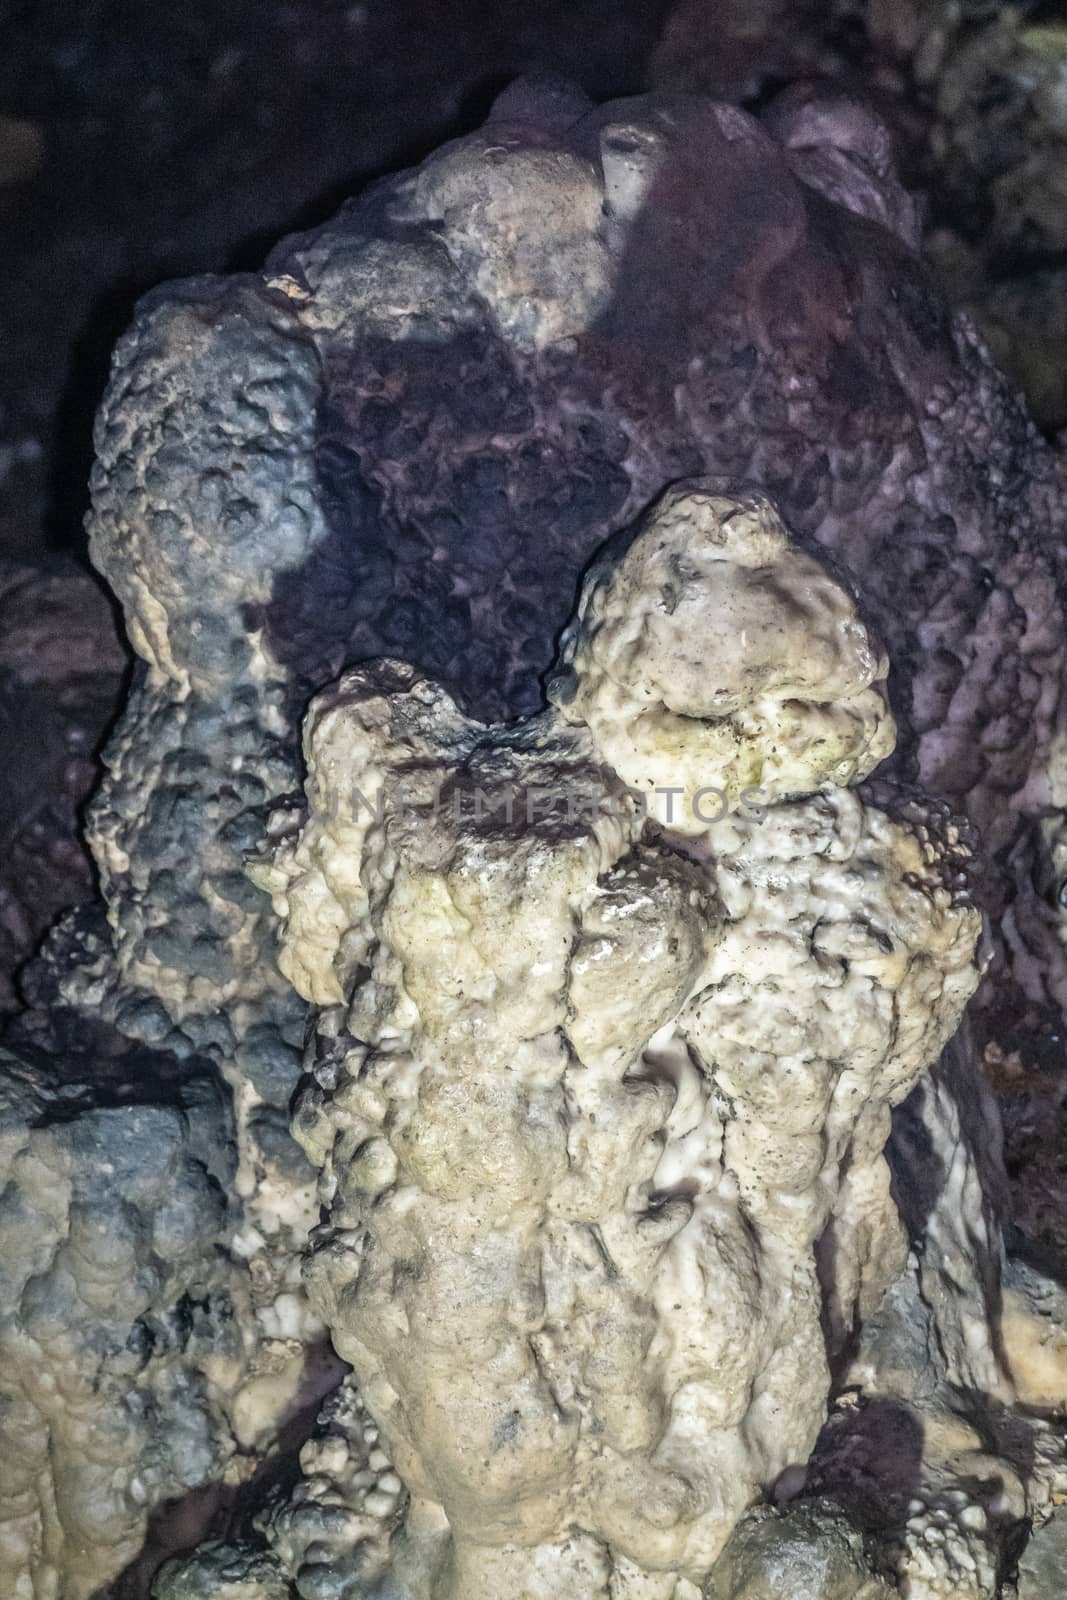 Stalagmites in Grottes-de-Han, Han-sur-lesse, Belgium. by Claudine